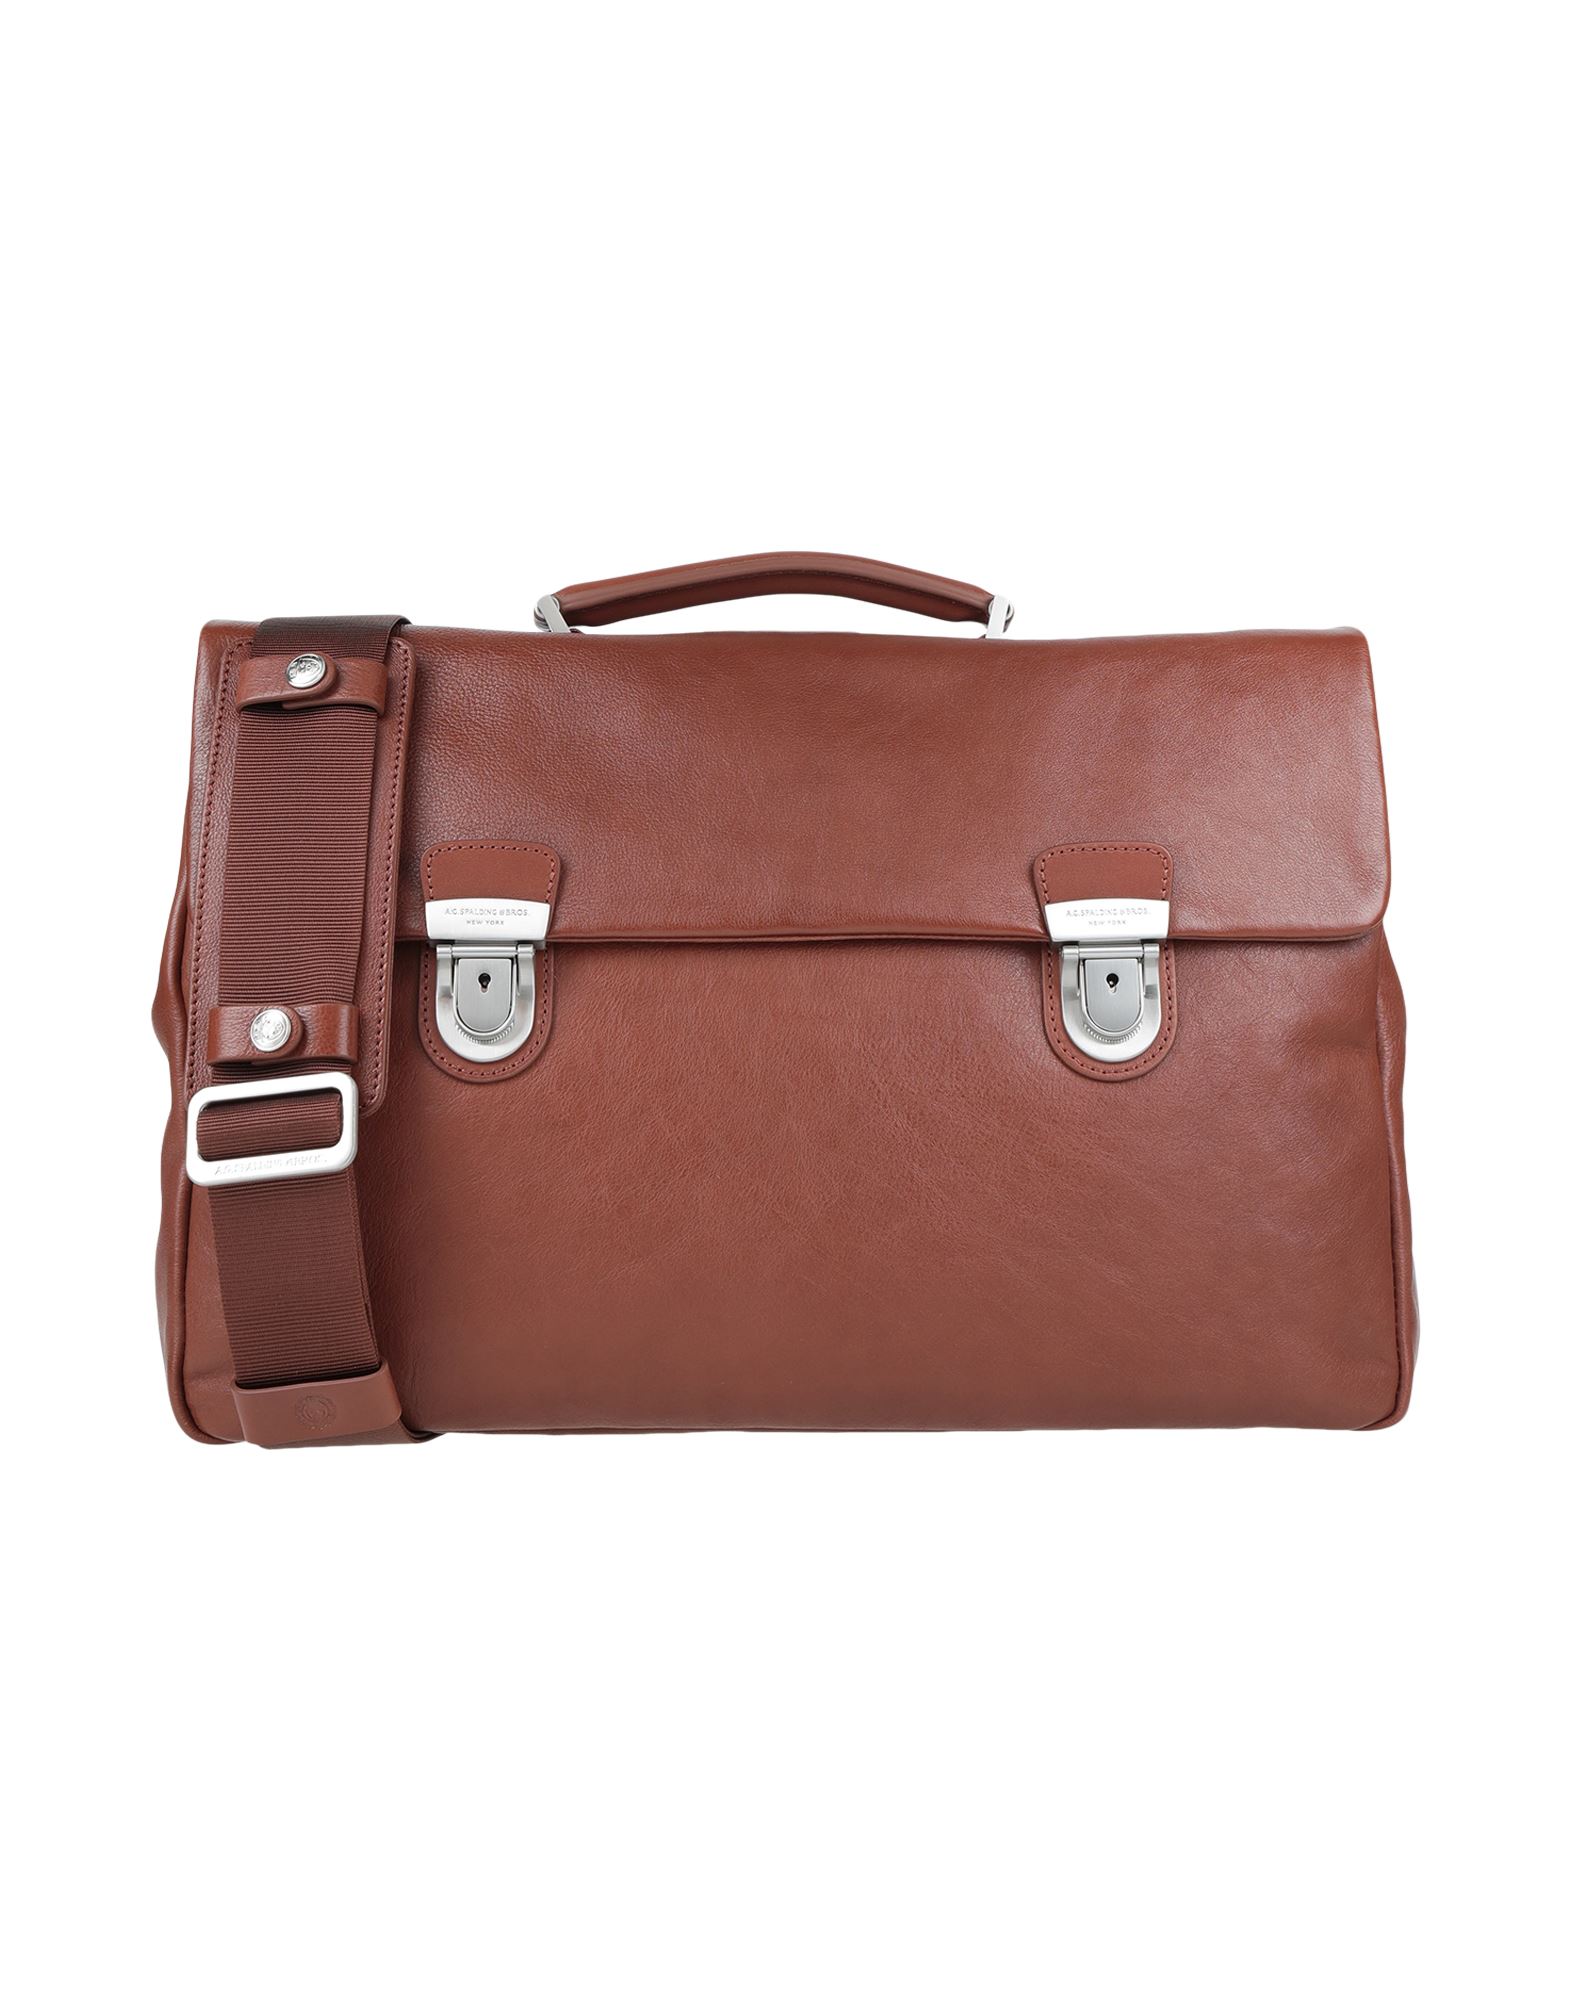 A.G. SPALDING & BROS. 520 FIFTH AVENUE New York Handbags